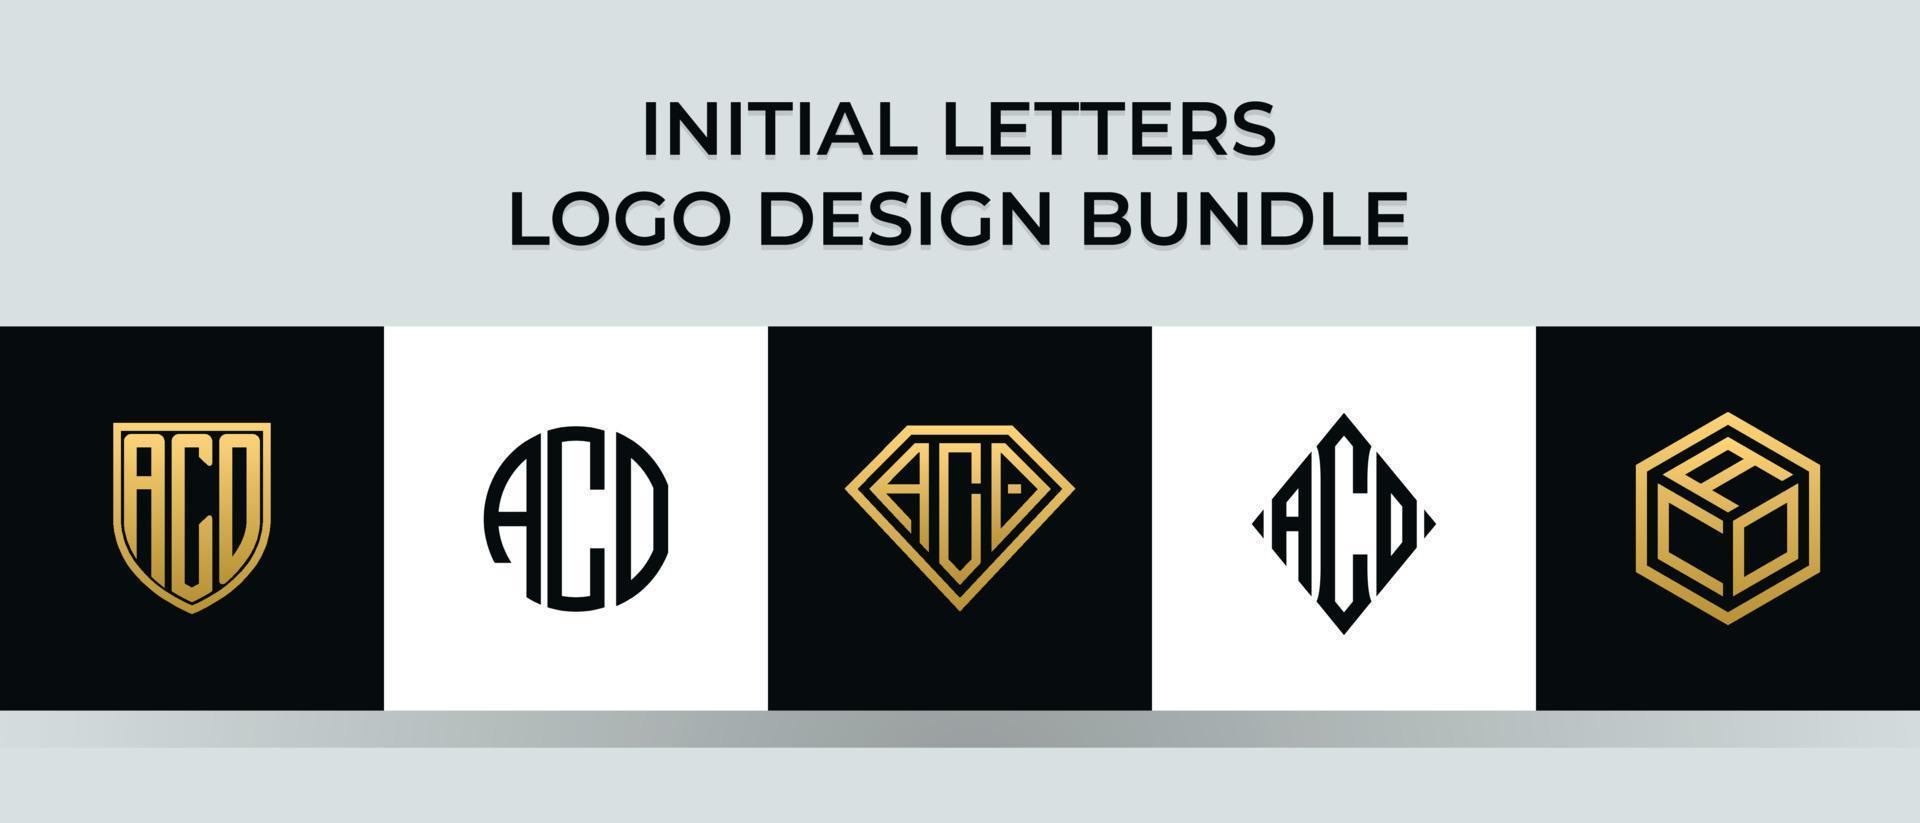 Anfangsbuchstaben aco Logo Designs Bundle vektor